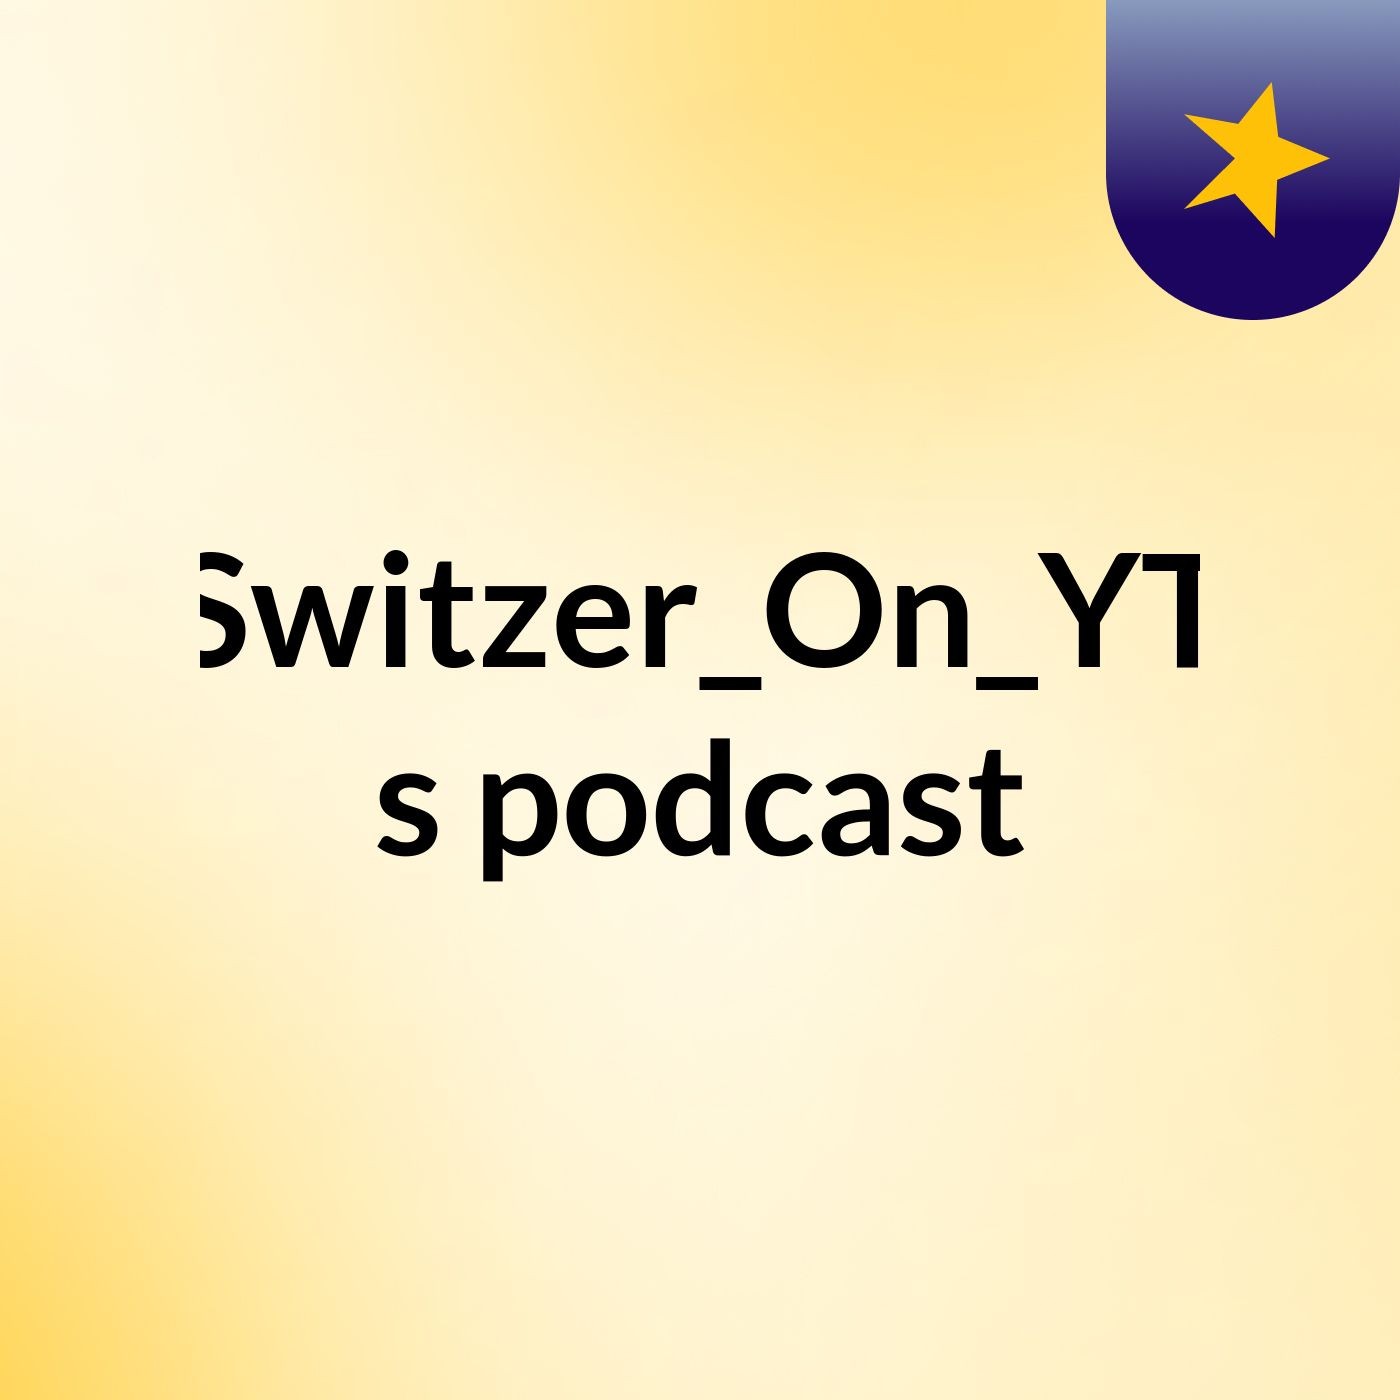 Switzer_On_YT's podcast